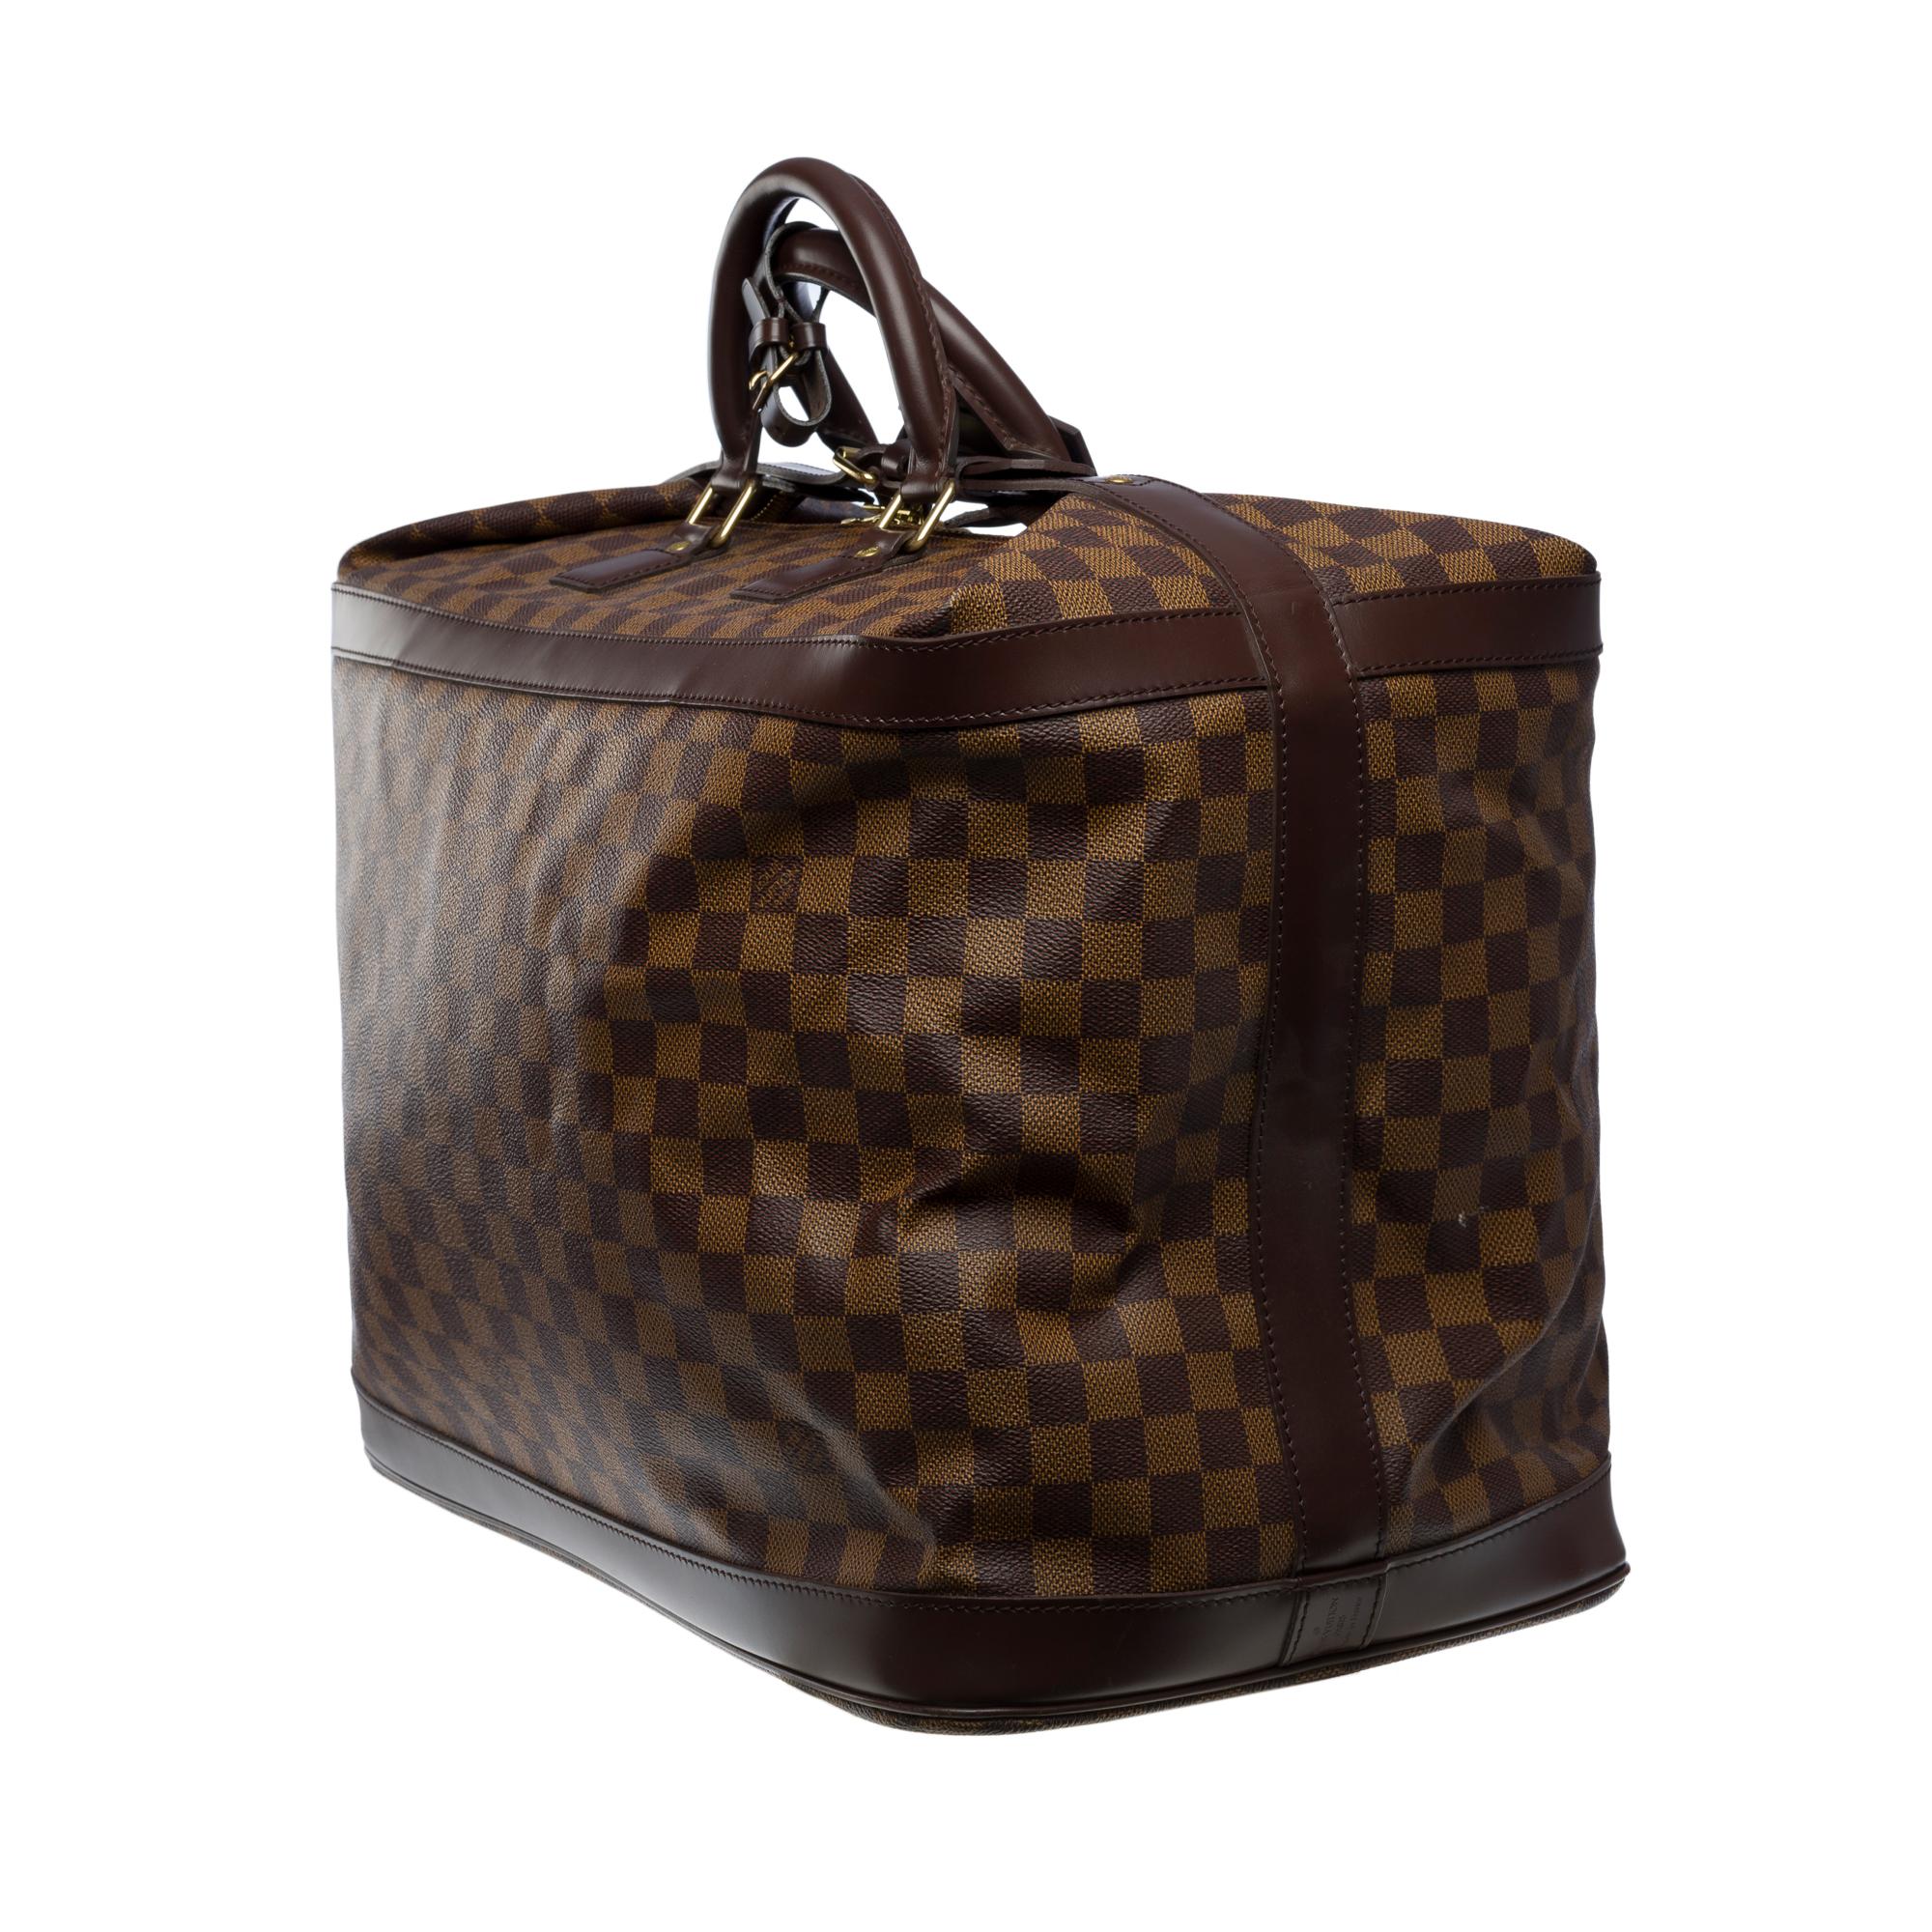 Women's or Men's Rare Louis Vuitton Cruiser 45 Travel bag in brown checkered Monogram canvas, GHW